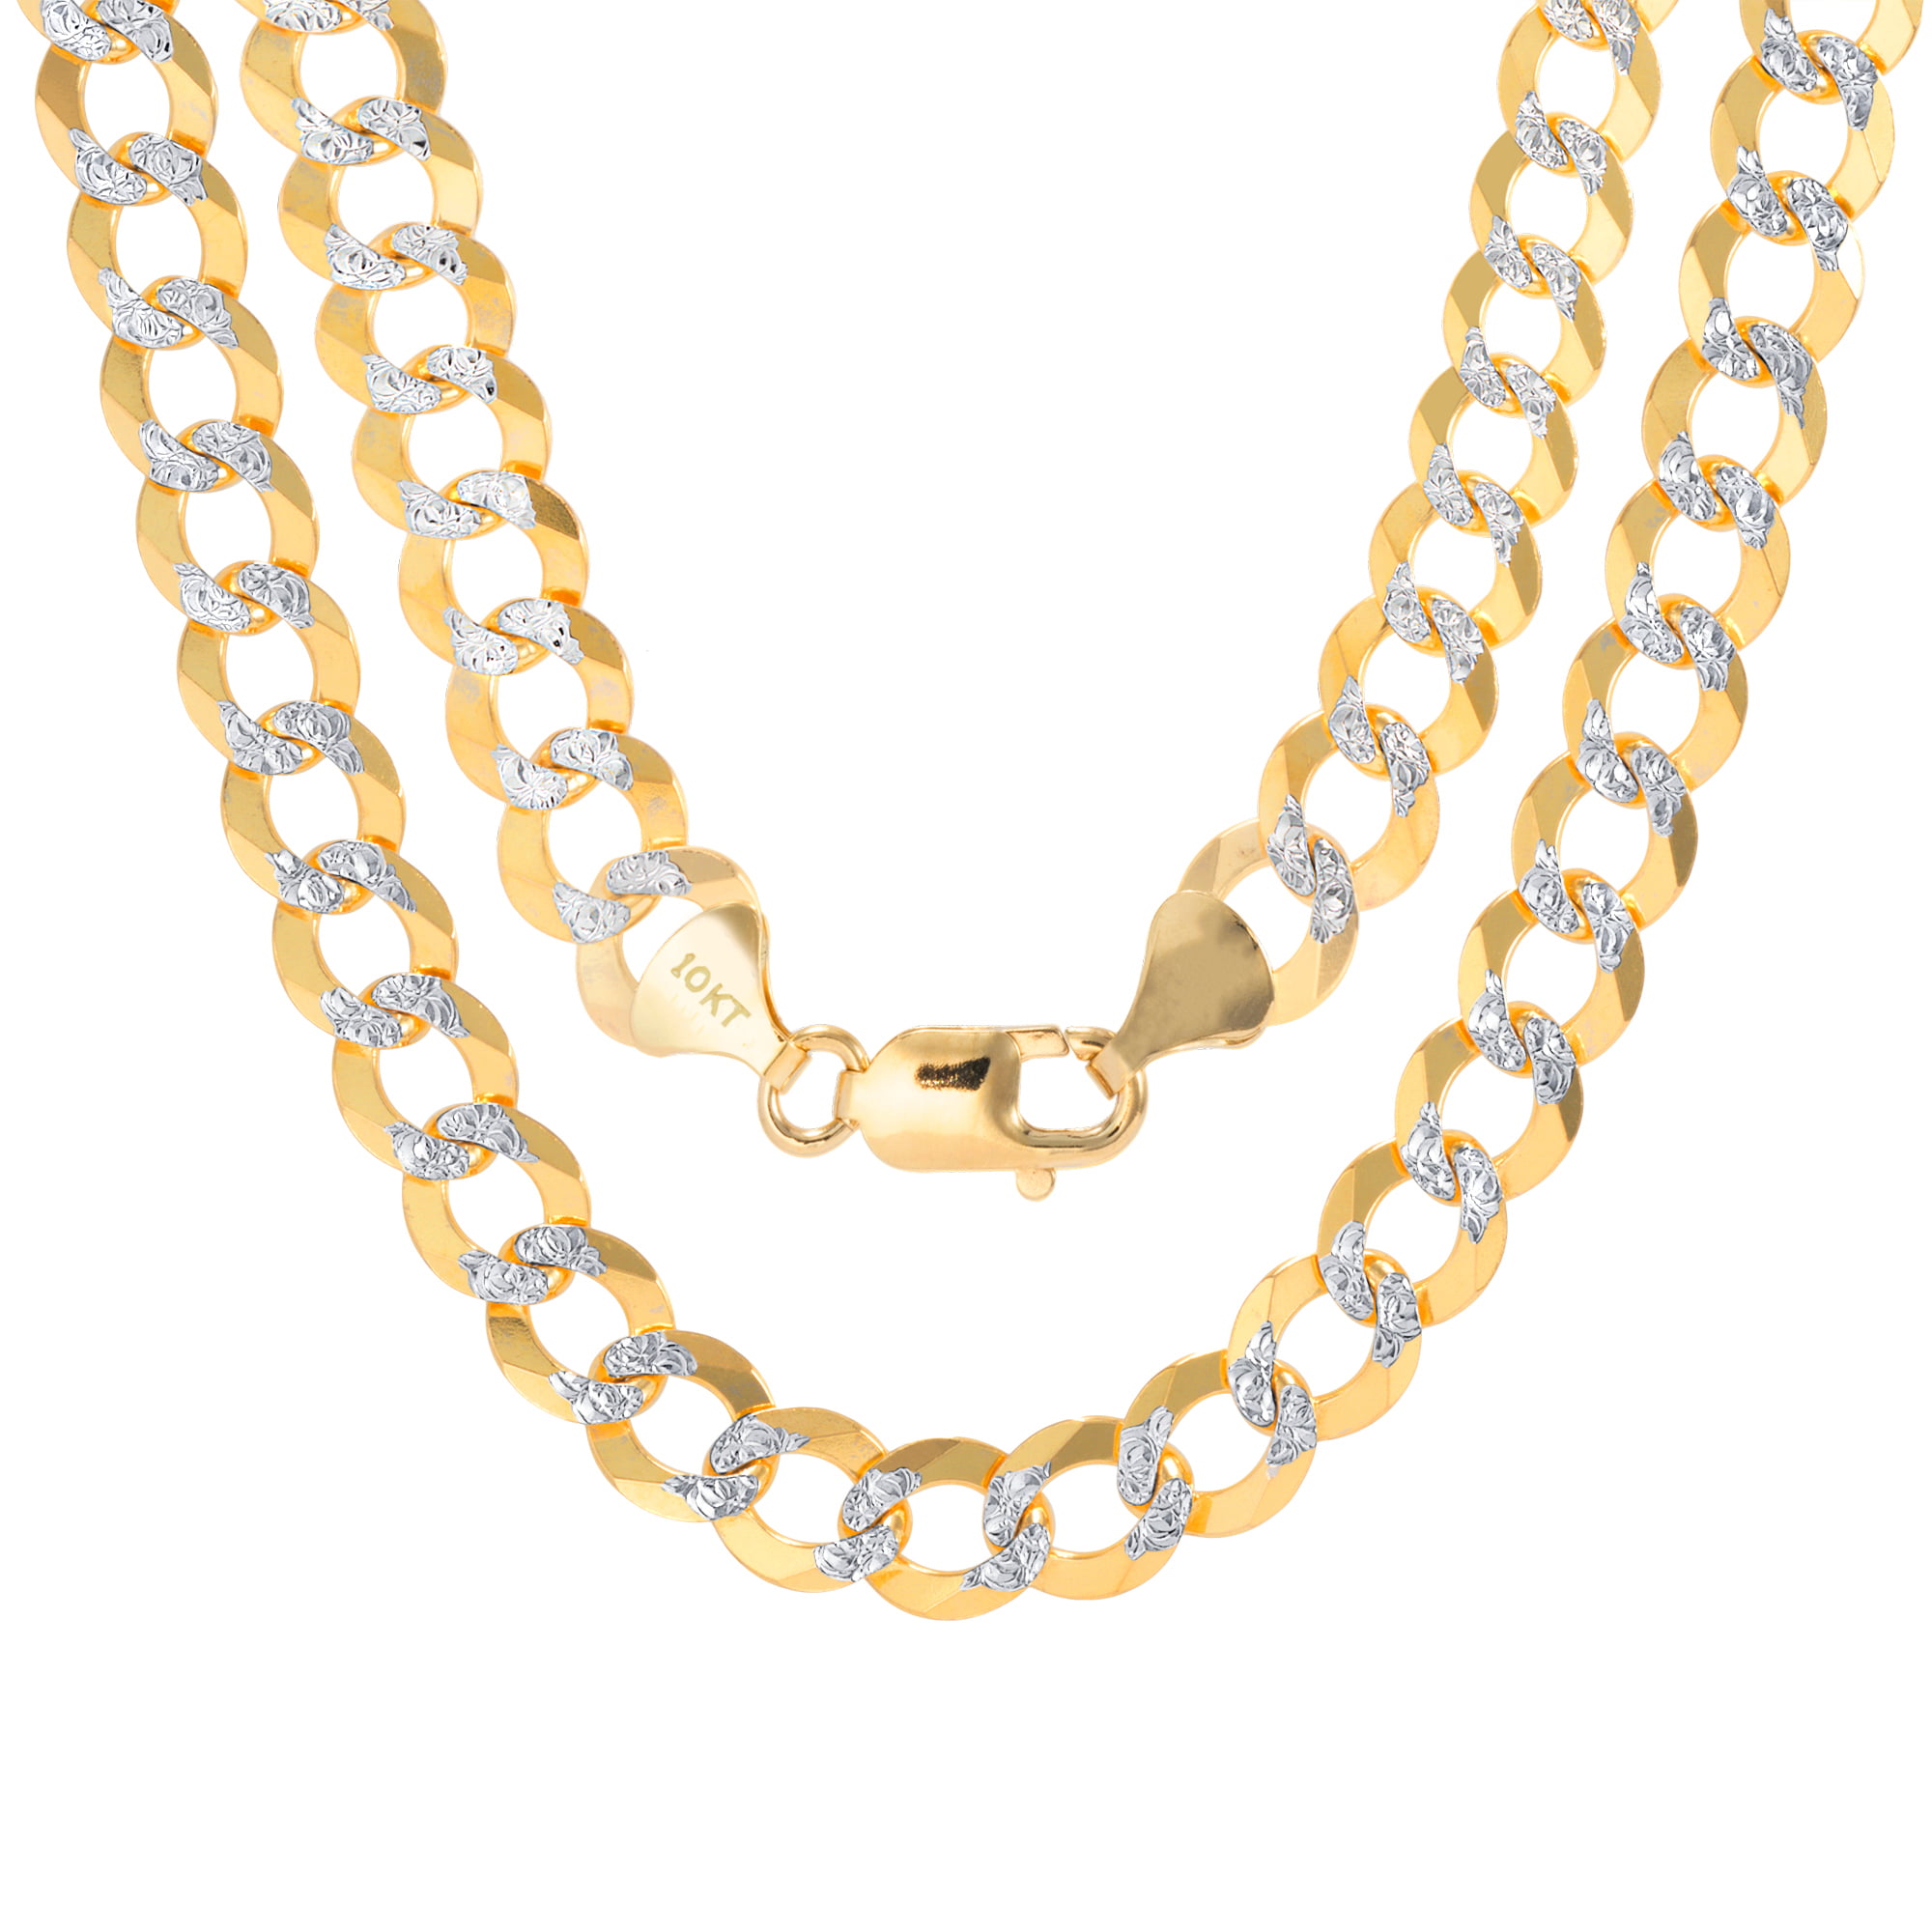 Wholesale 10mm Concave Cuban link Chain Diamond Cut Necklace 14k Gold Plated